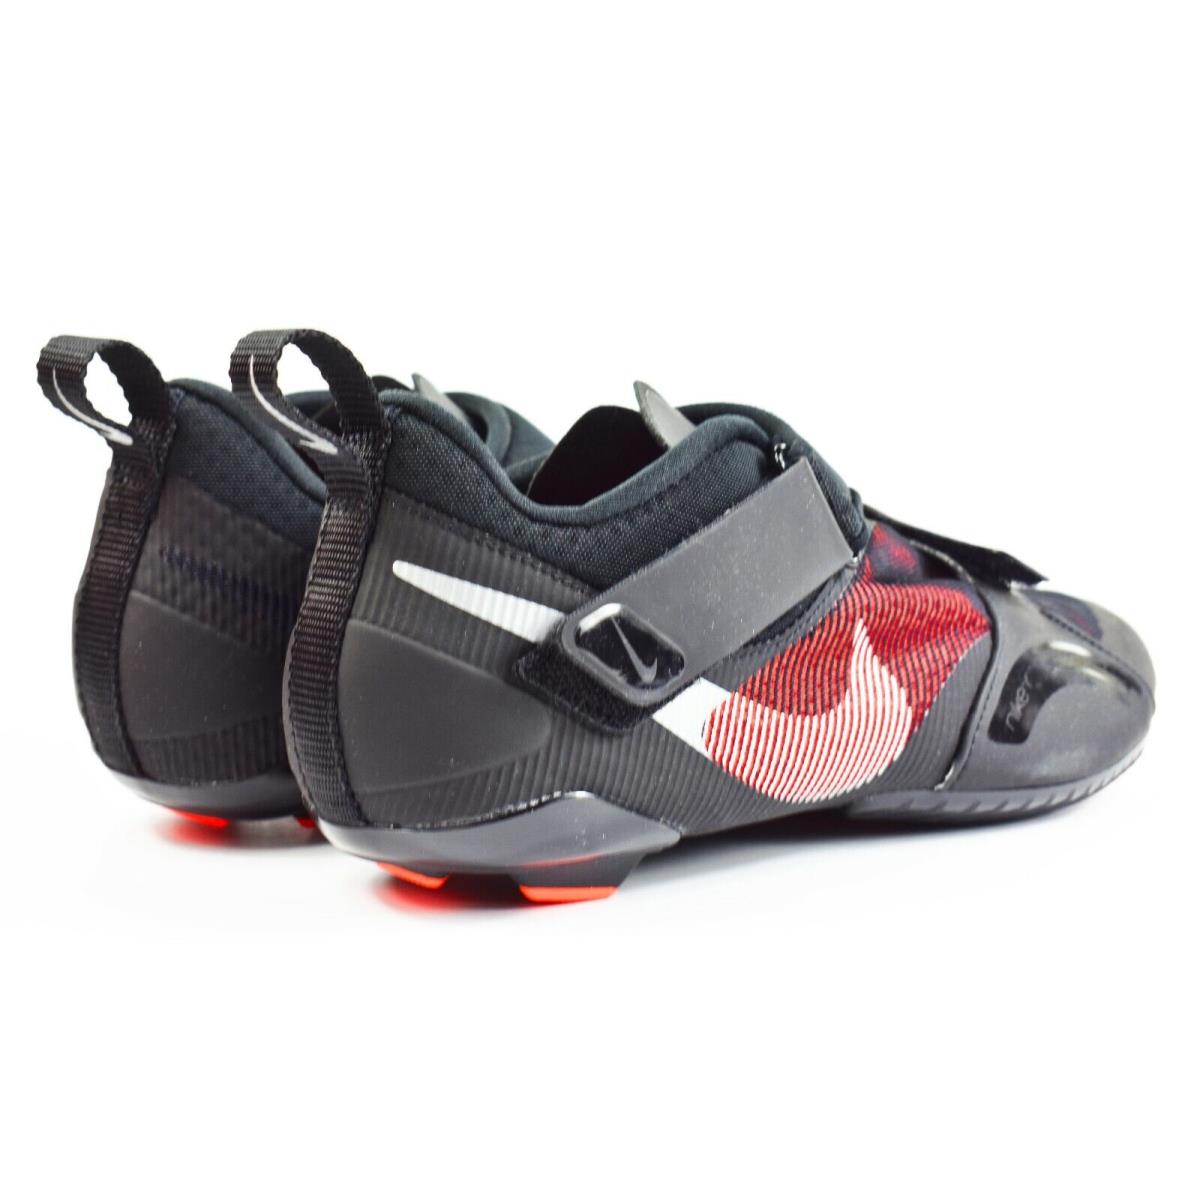 Nike shoes Superrep Cycle - Black 3